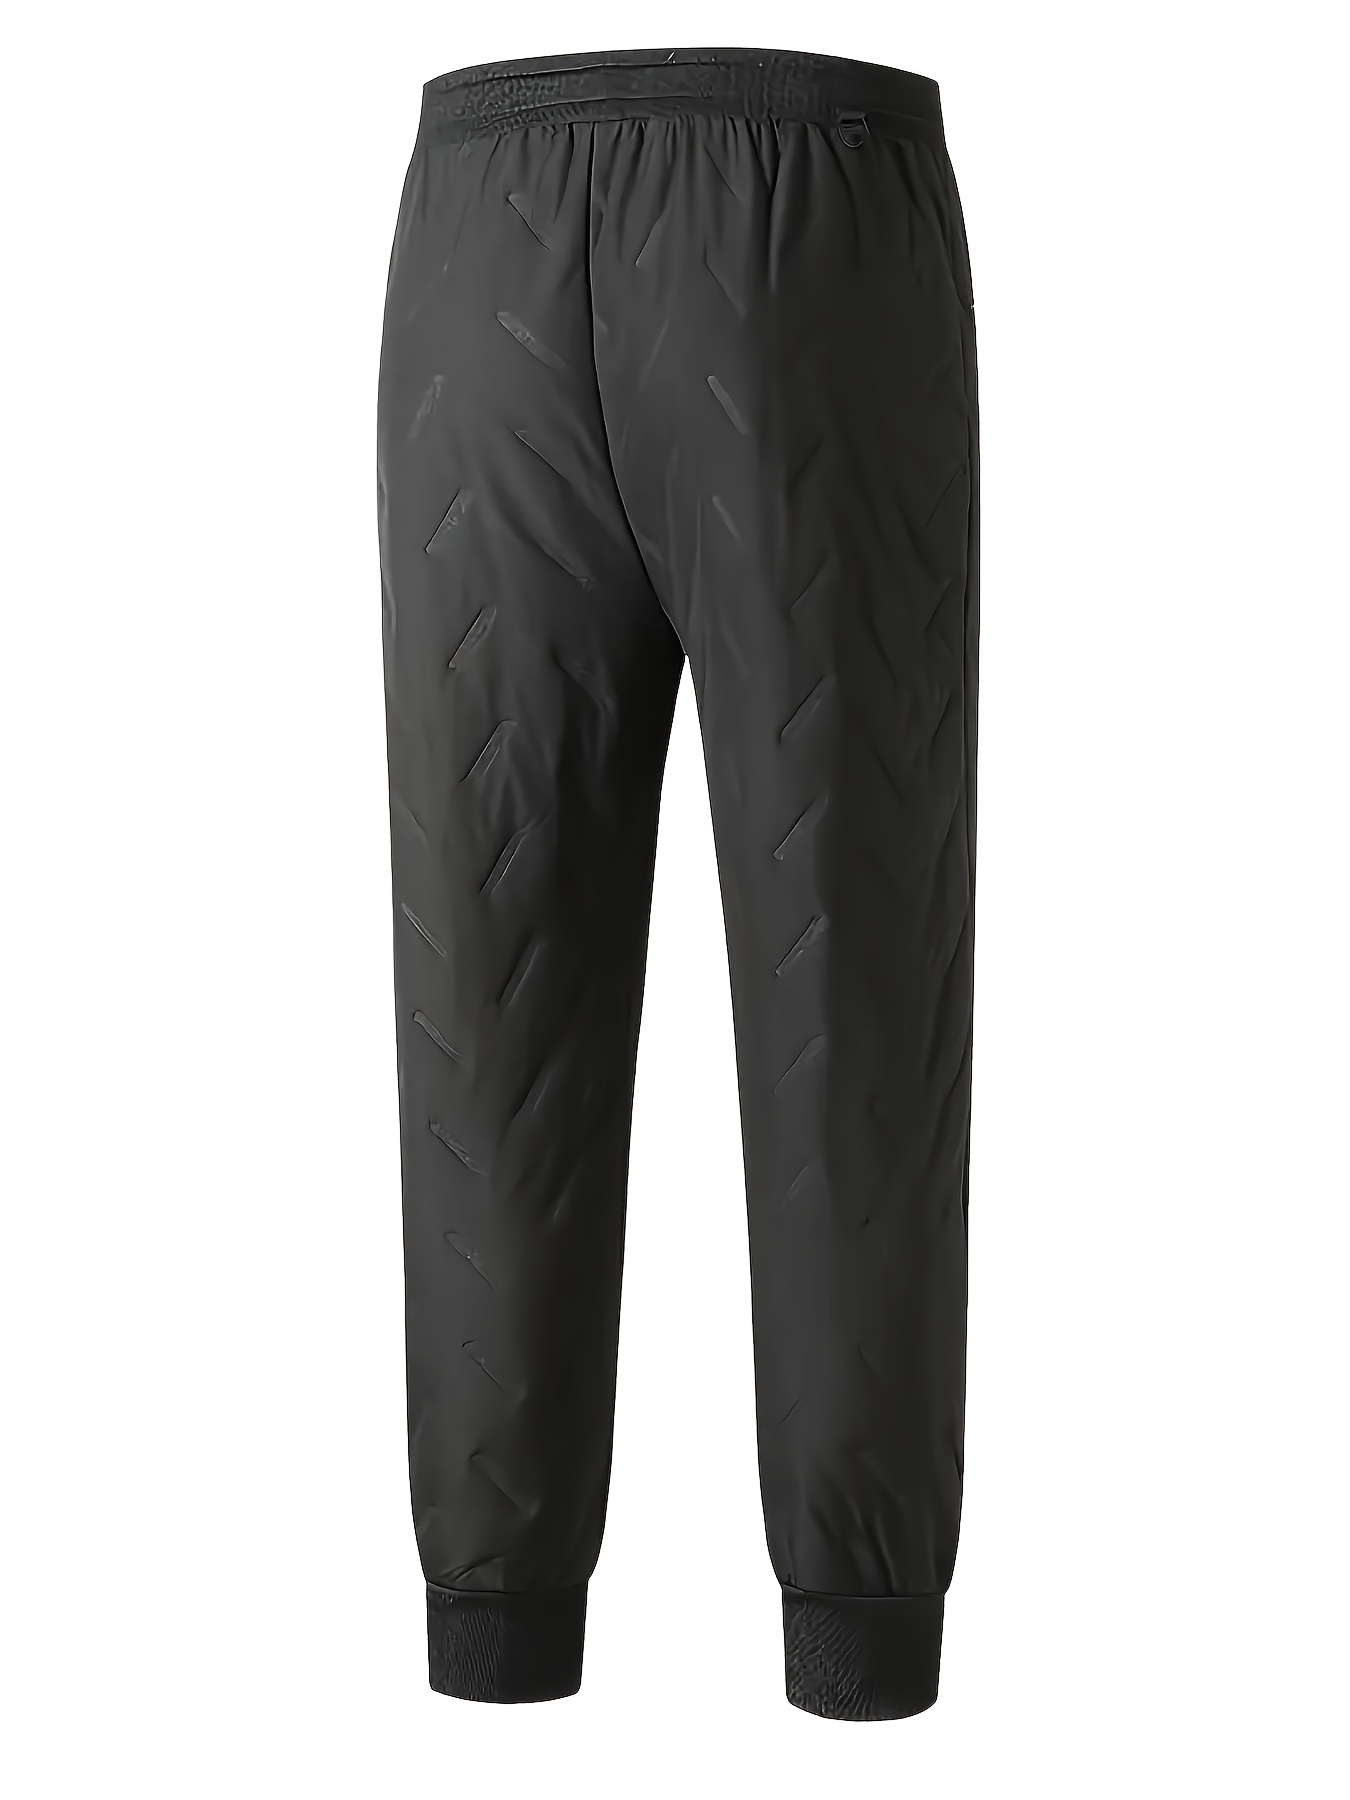 Mens Thermal Sweatpanst Cotton Warm Winter Pants Outdoor Sports Joggers Fleece  Lined Drawstring Elastic Waist 